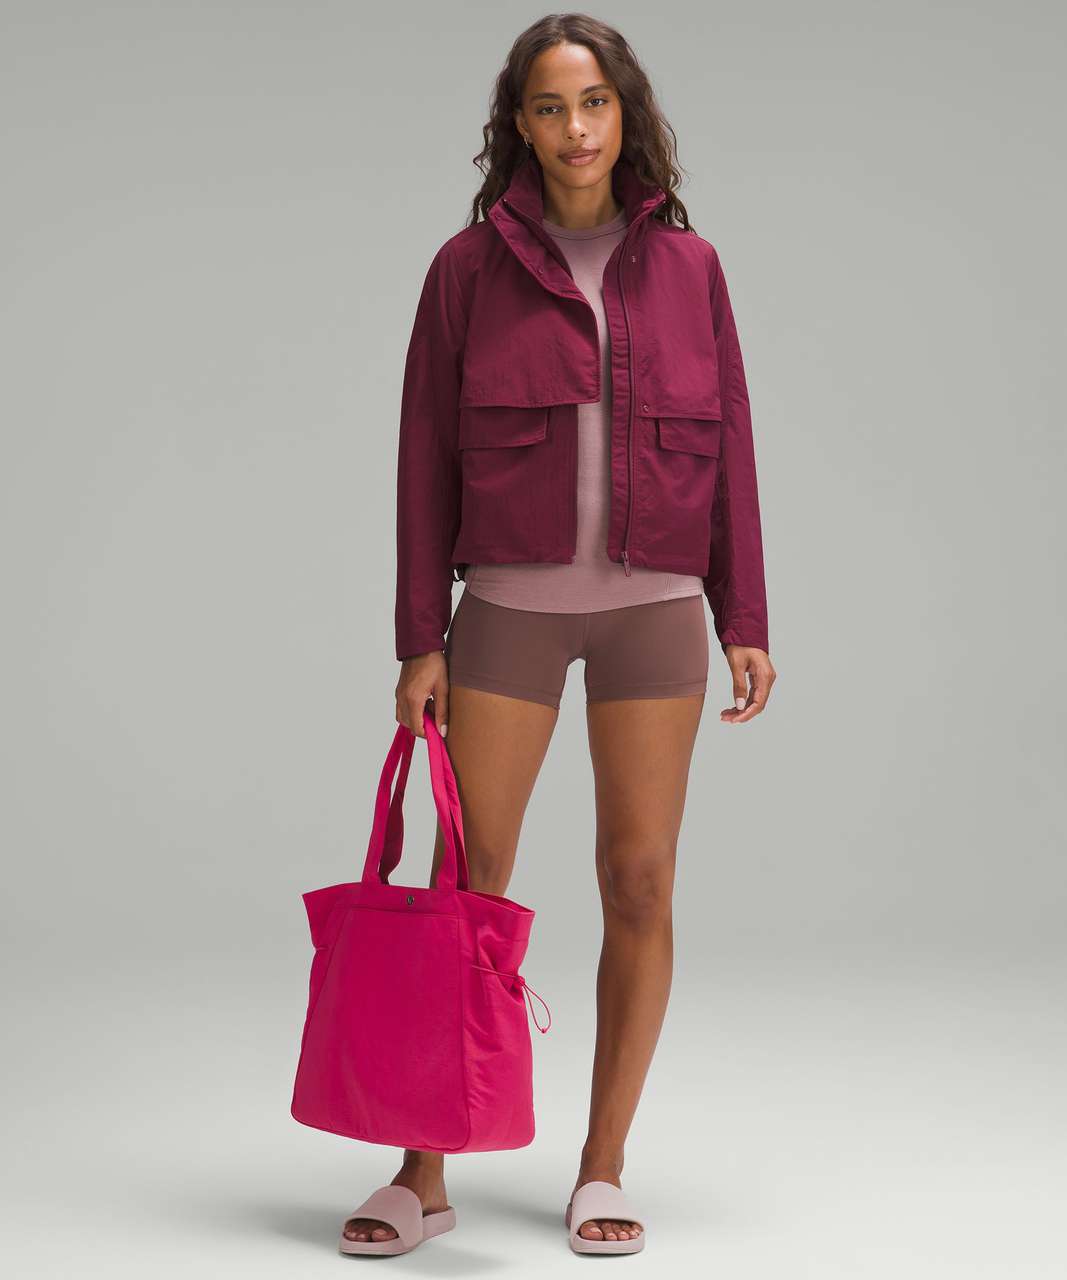 Lululemon Side-Cinch Shopper Bag 18L - Raspberry Coulis